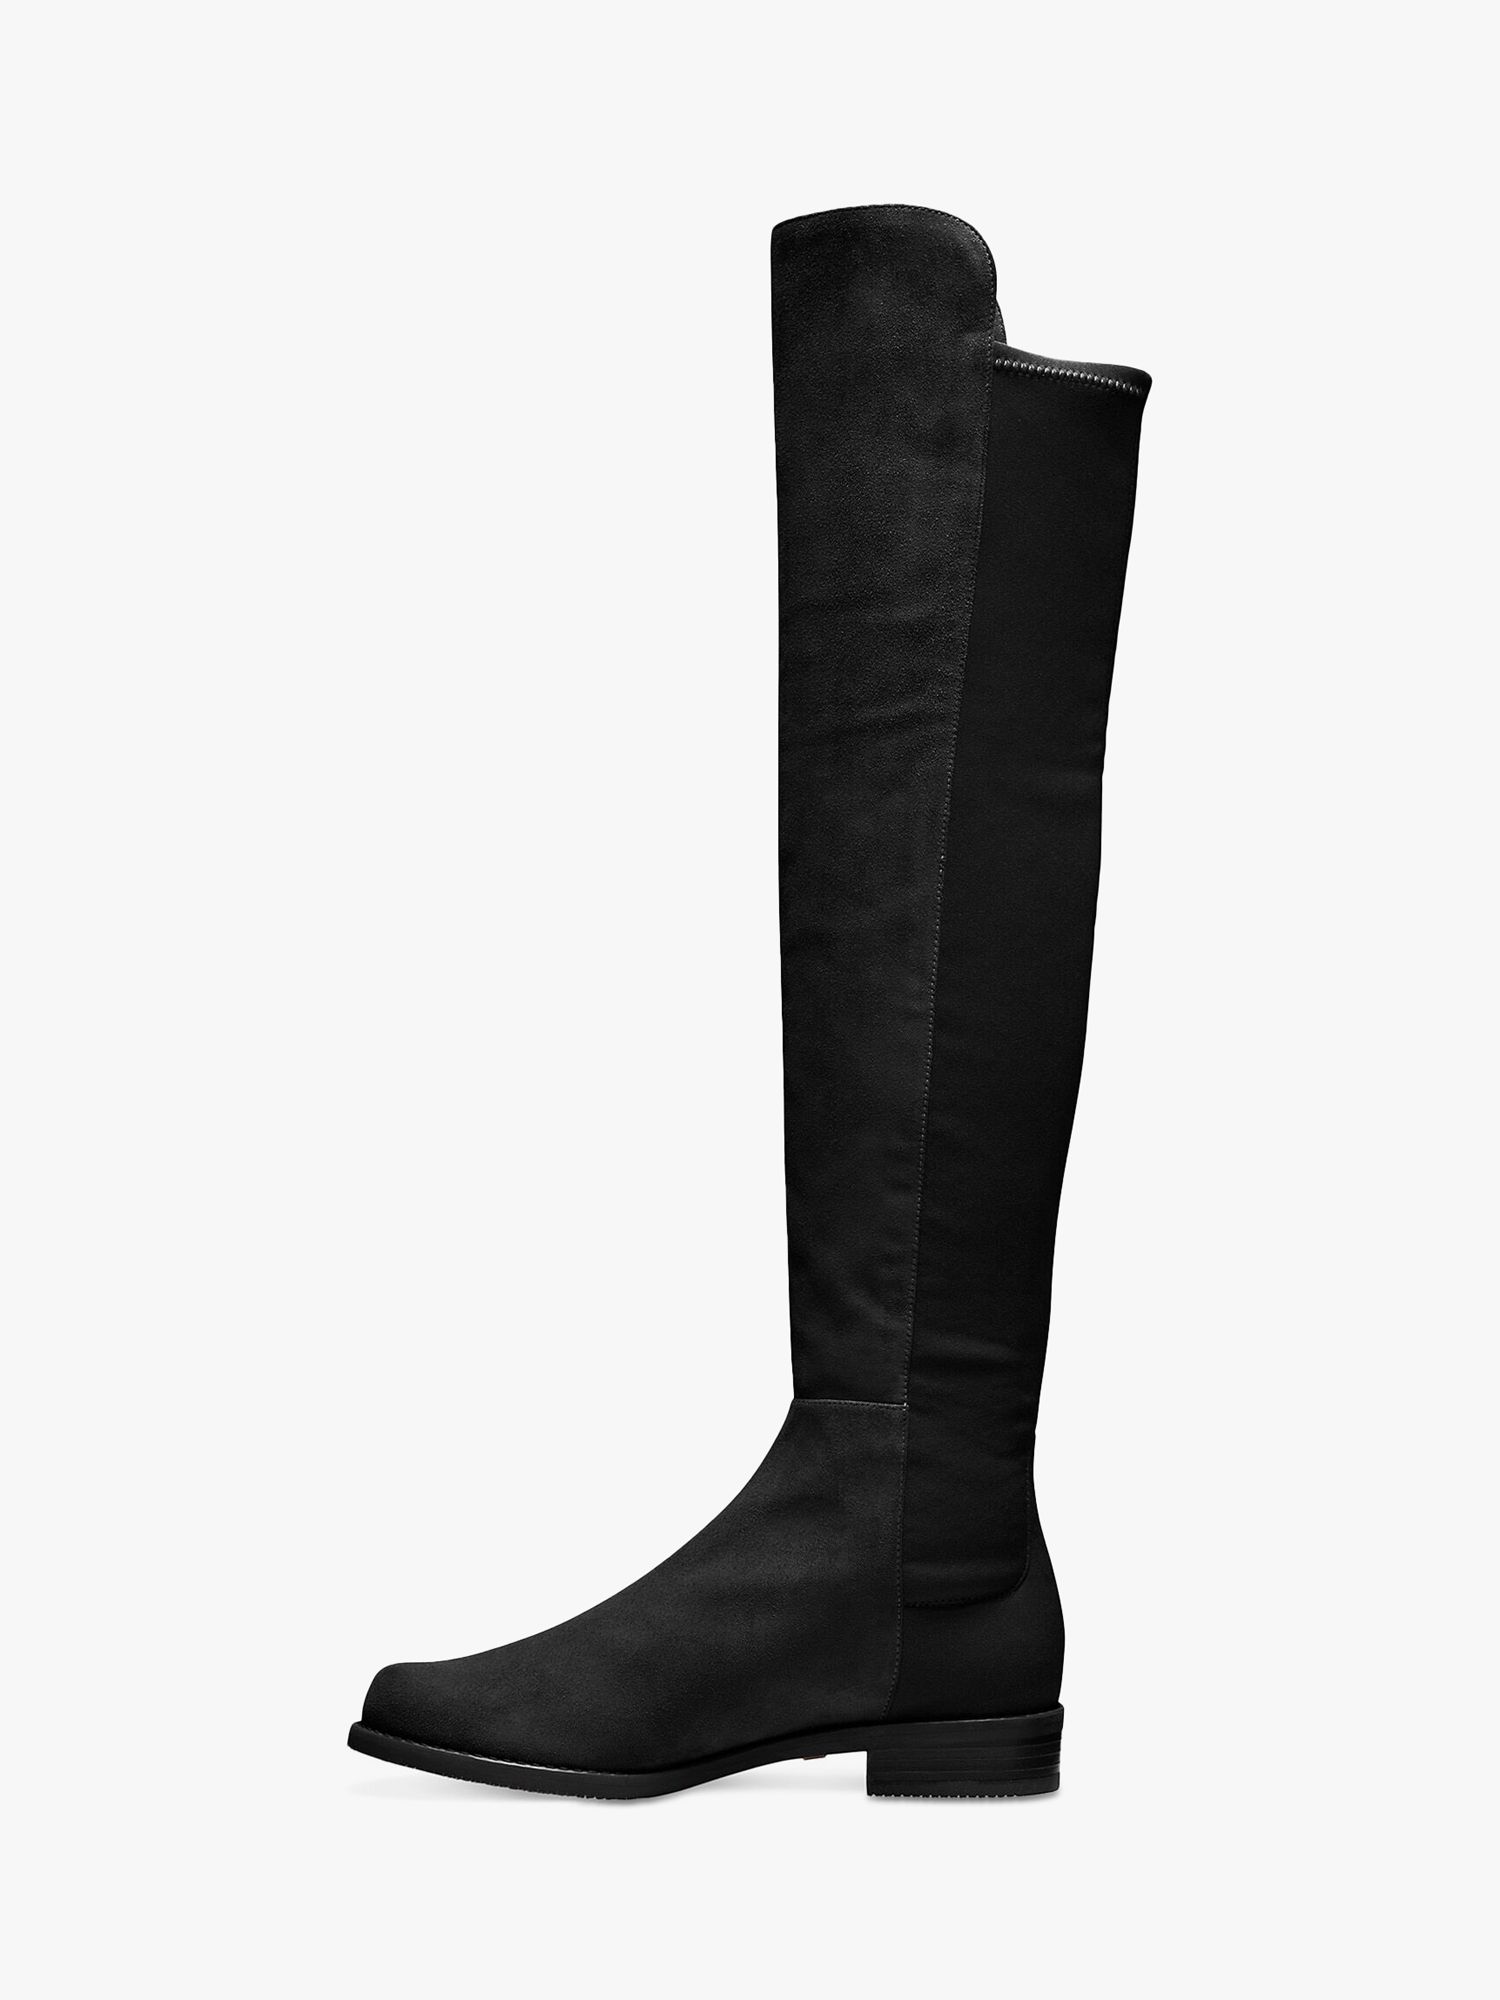 Stuart Weitzman 5050 Suede Long Knee Boots, Black at John Lewis & Partners